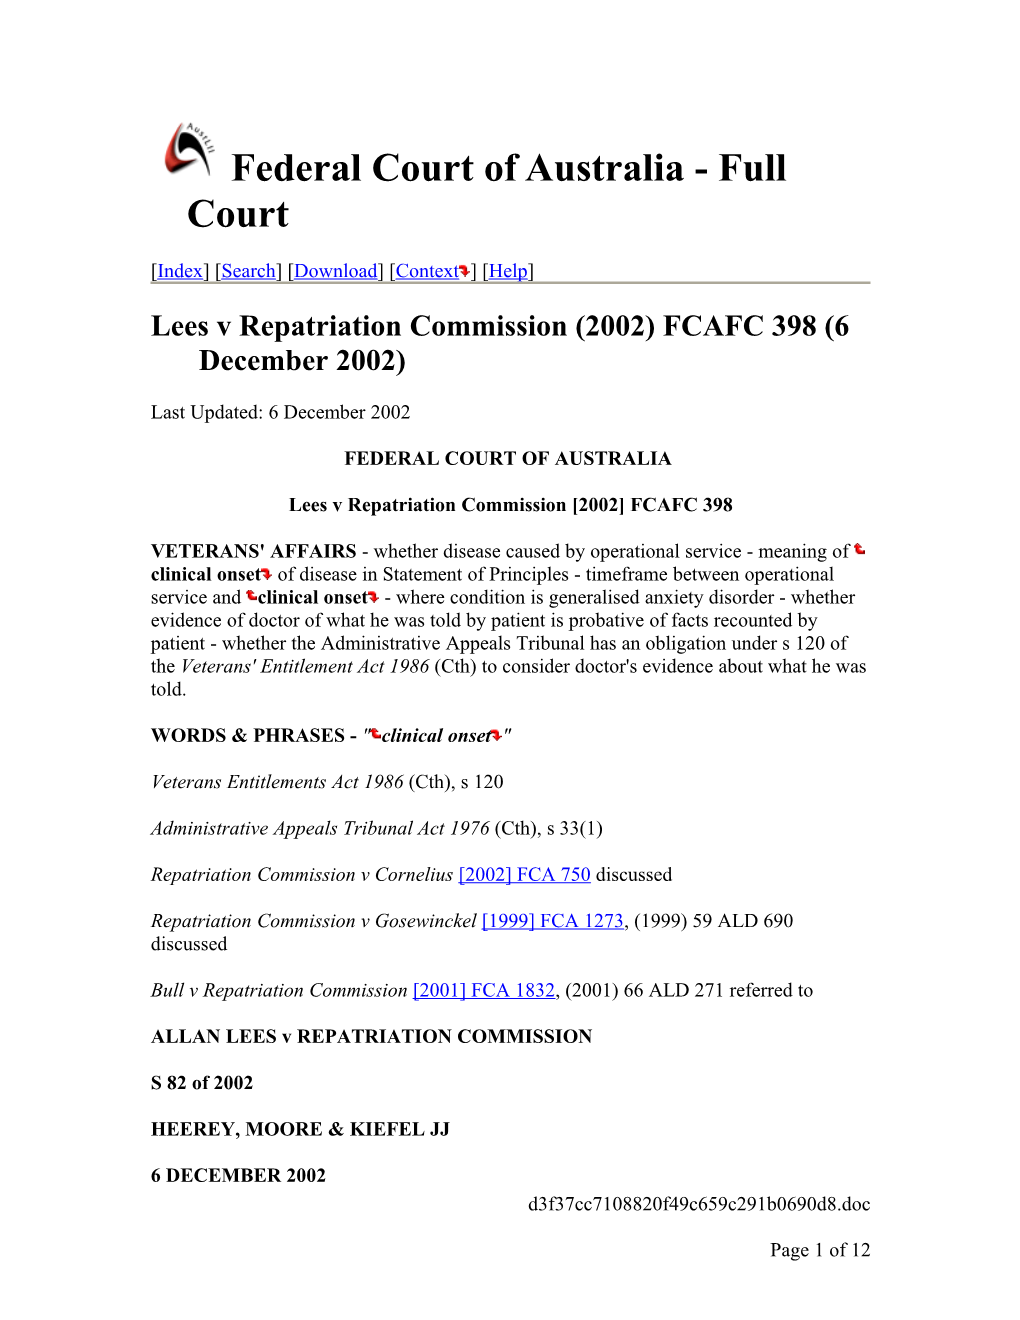 Federal Court of Australia - Full Court